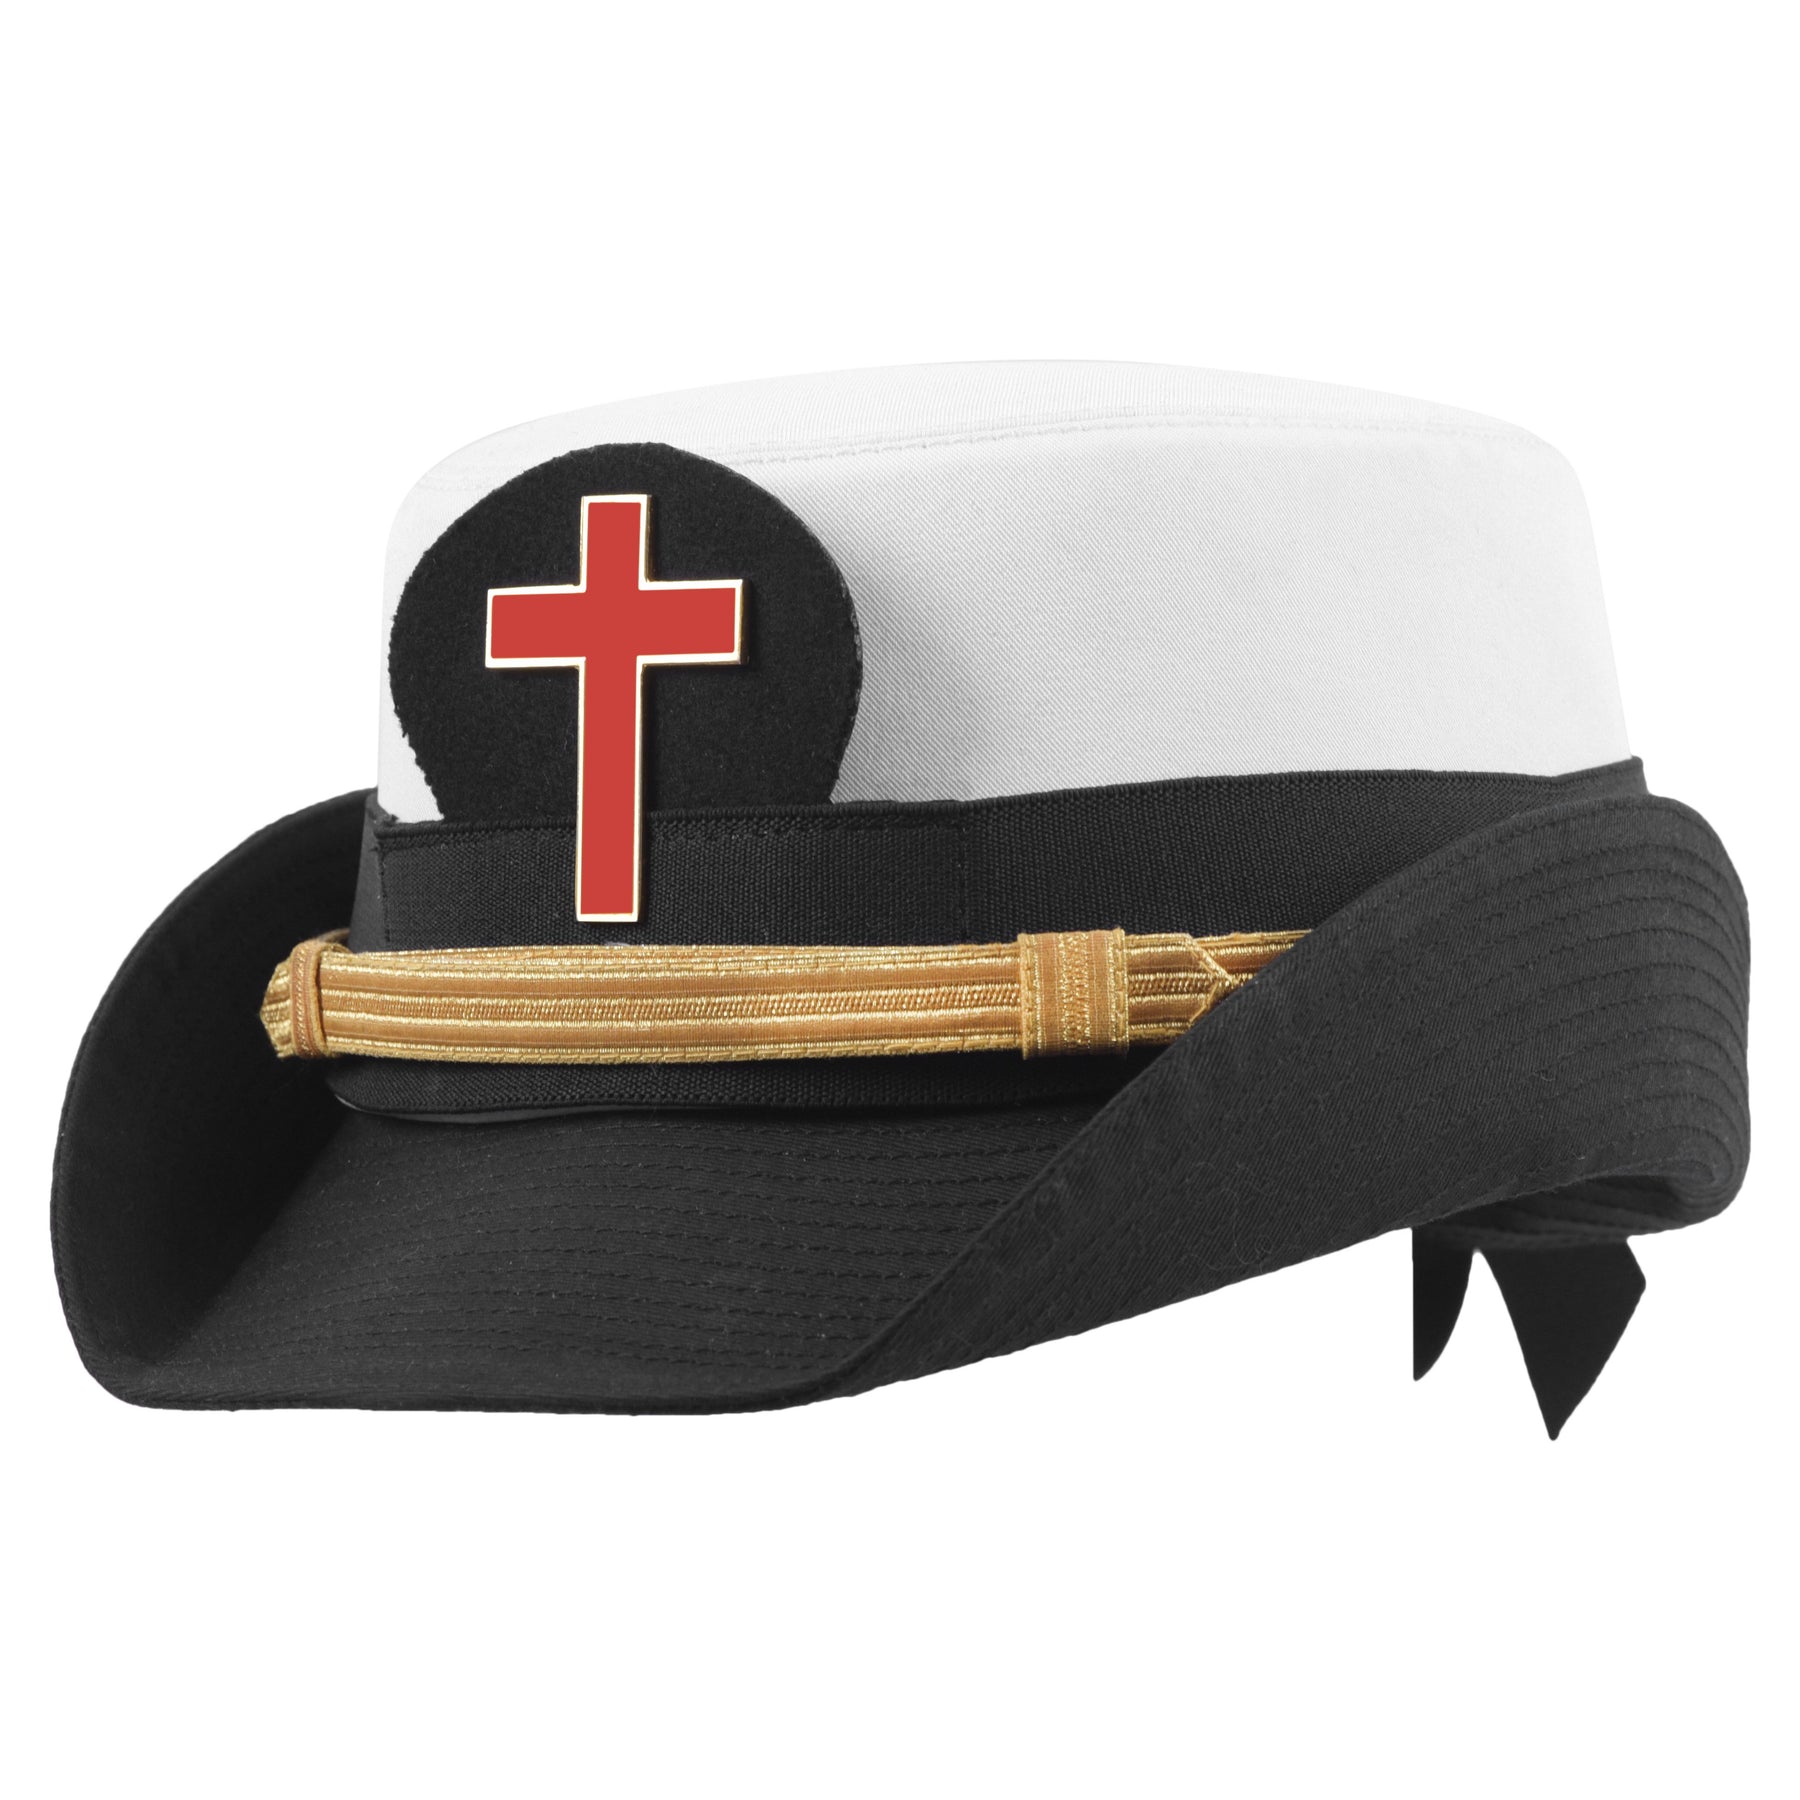 Knights Templar Commandery Fatigue Cap - Red Cross With Gold Strap - Bricks Masons